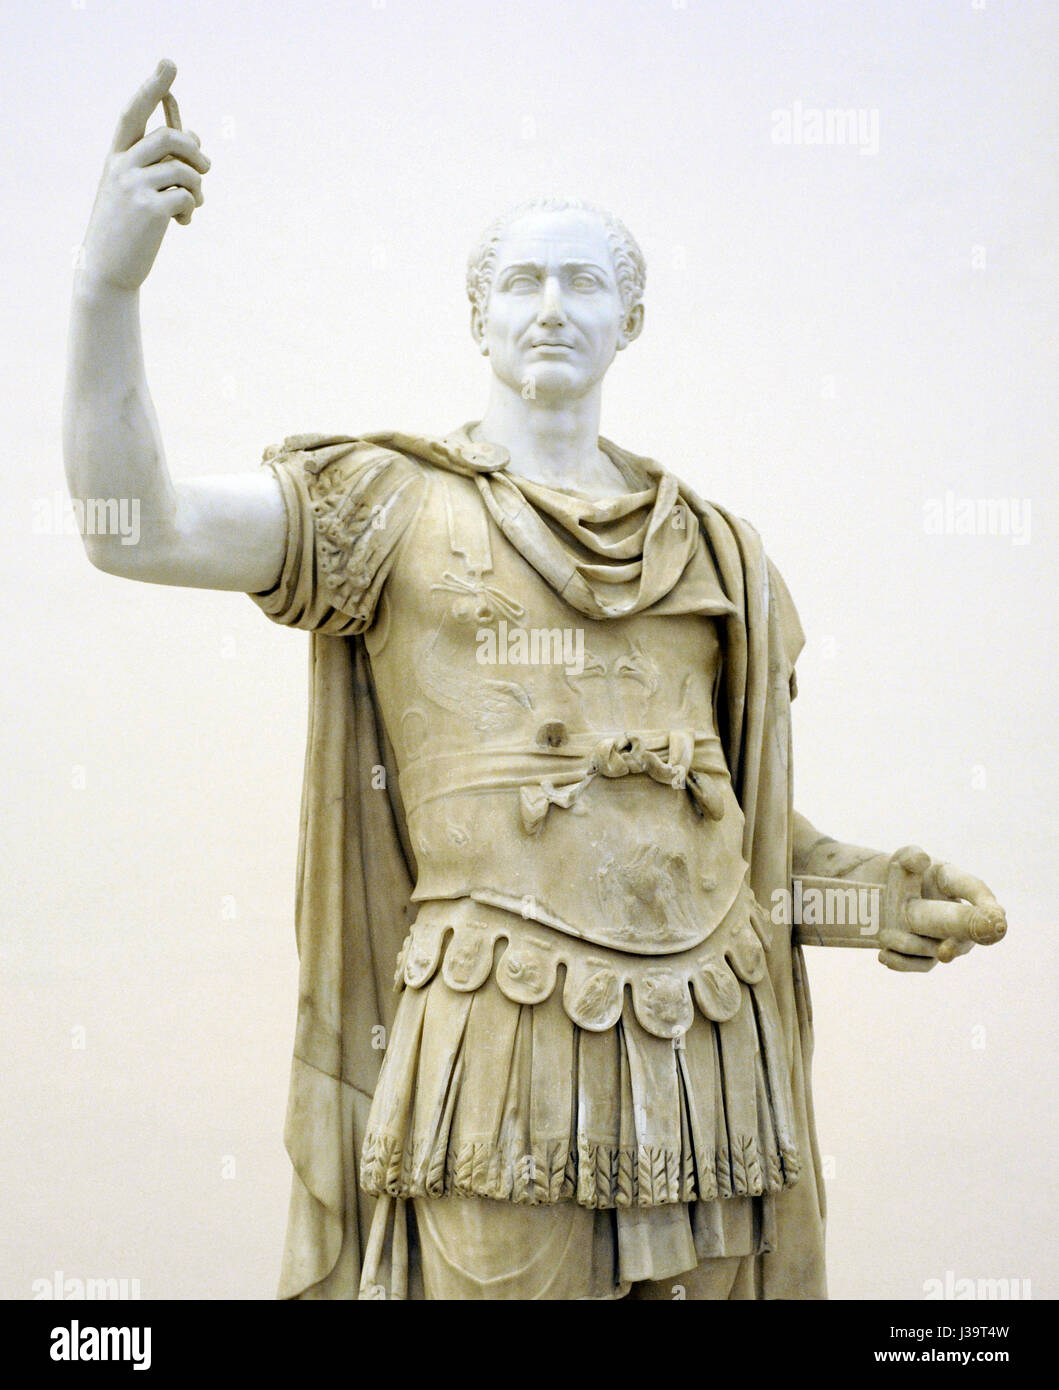 Figure in miliary uniform, with a modern head of Julius Caesar ...